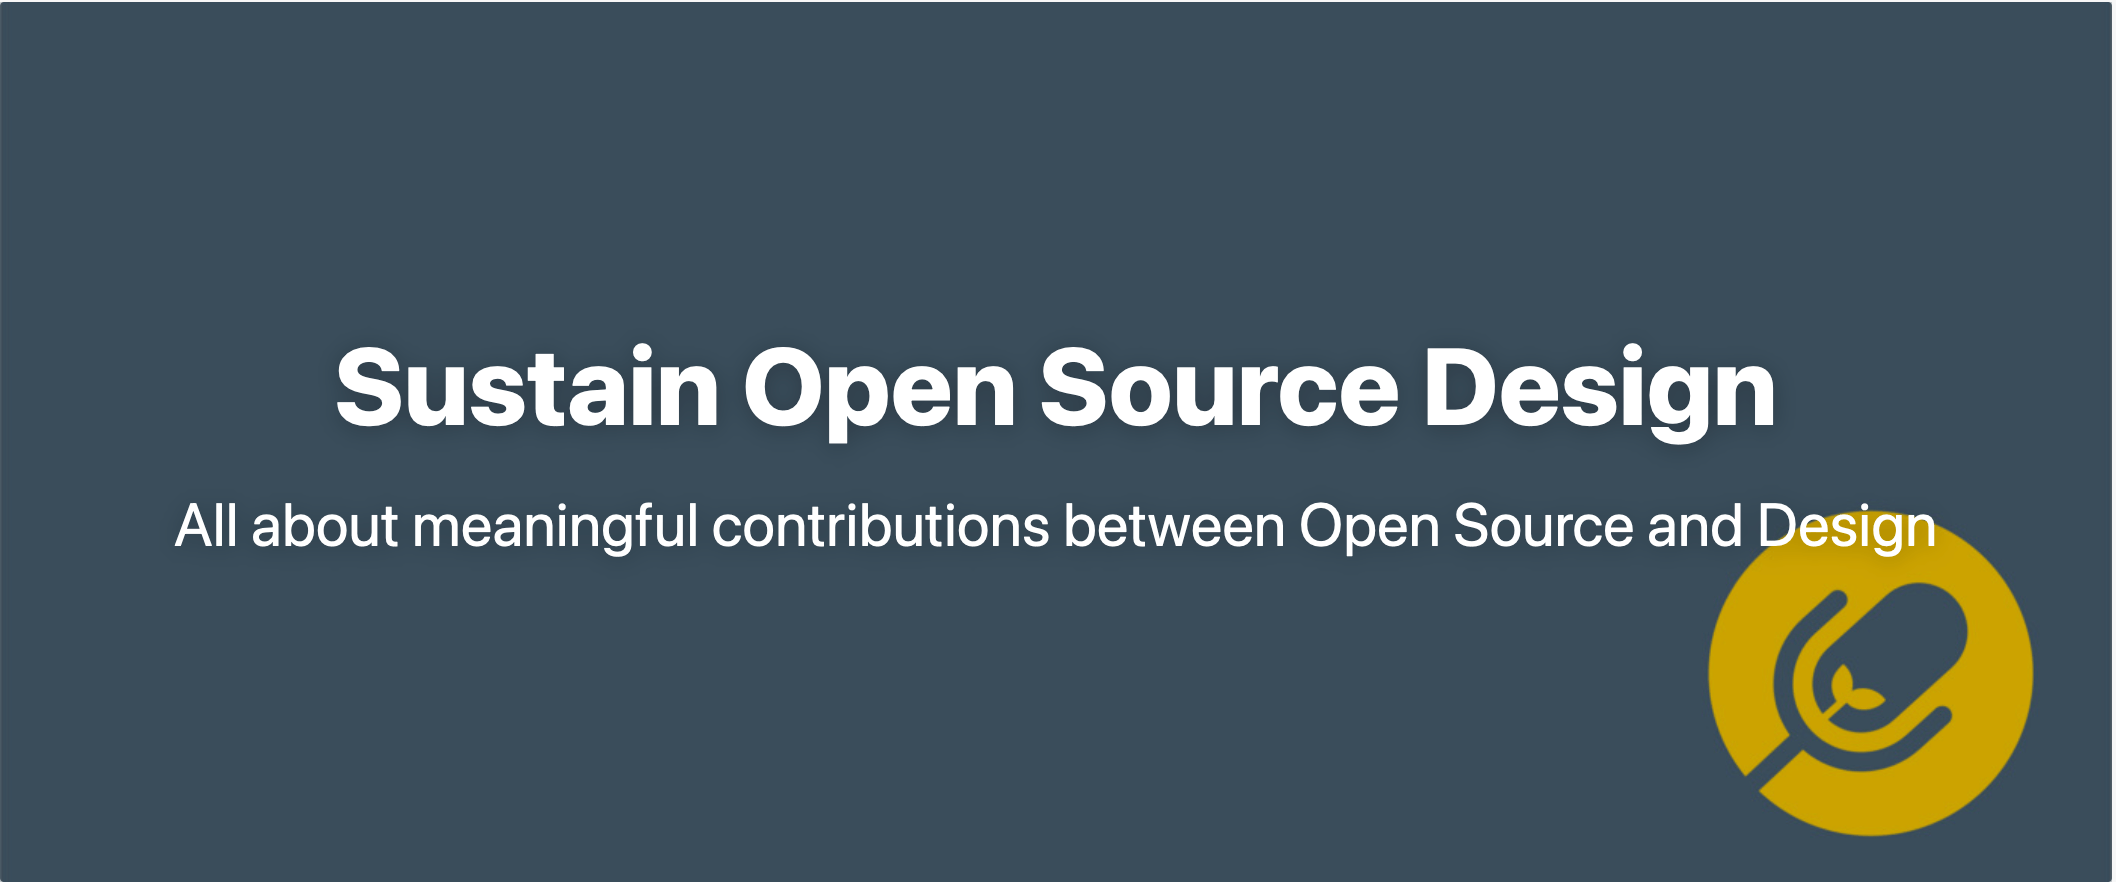 Sustain Open Source Design Banner